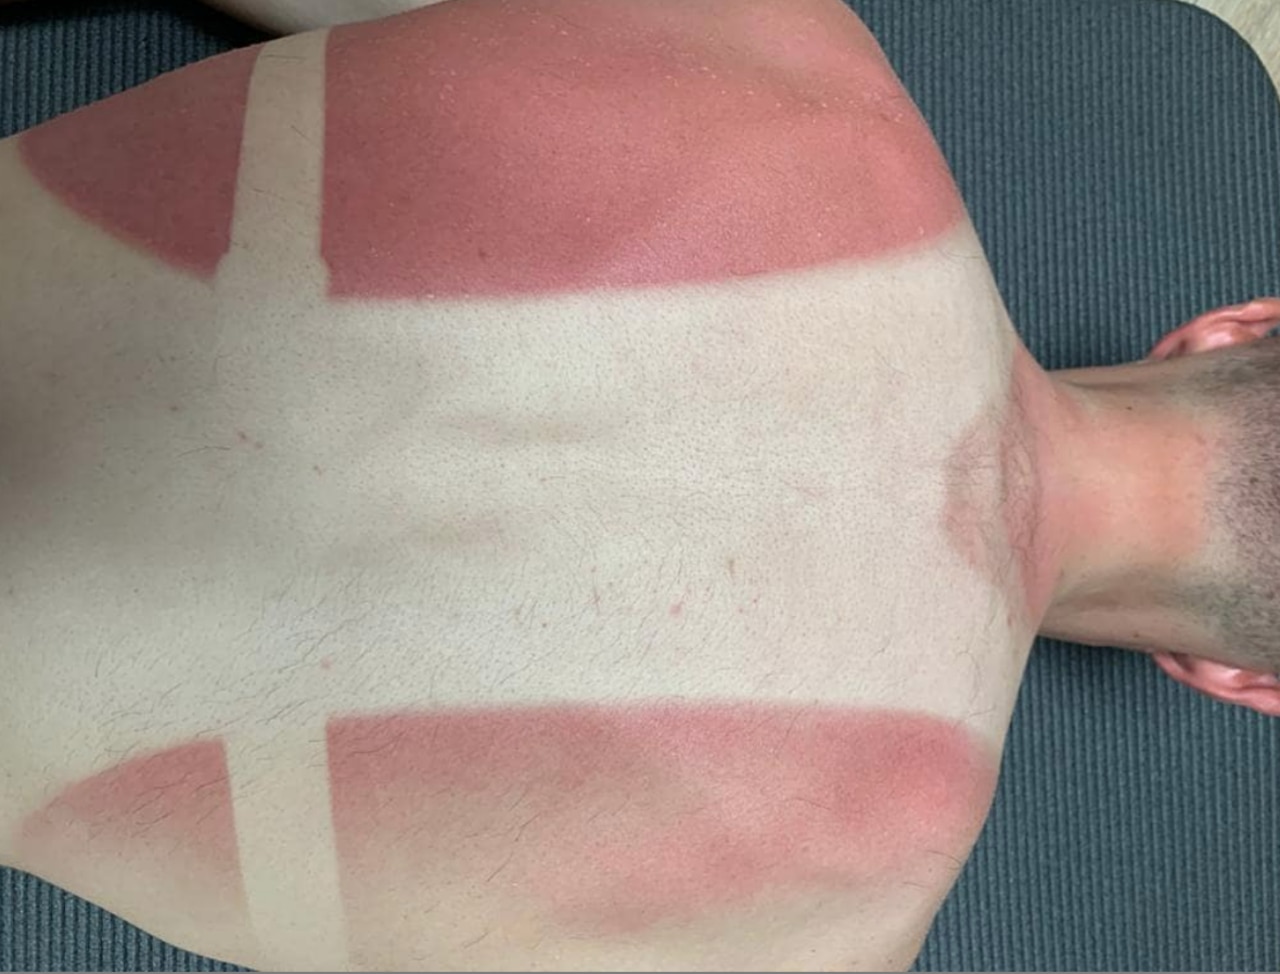 Enric Mas shows off his sunburn.